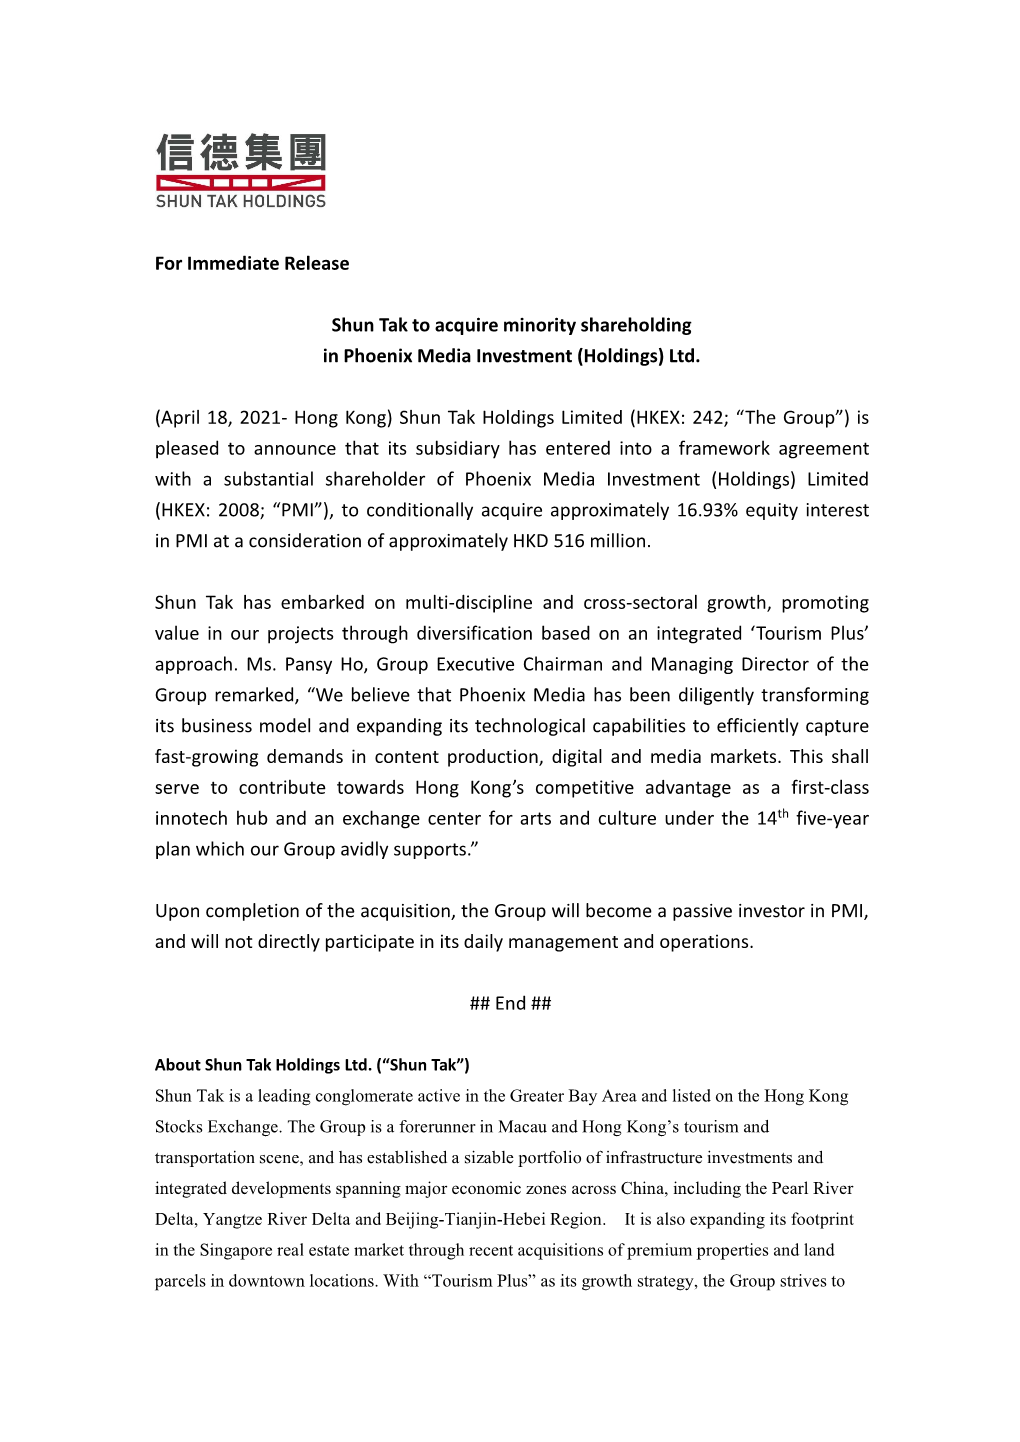 Shun Tak to Acquire Minority Shareholding in Phoenix Media Investment (Holdings) Ltd